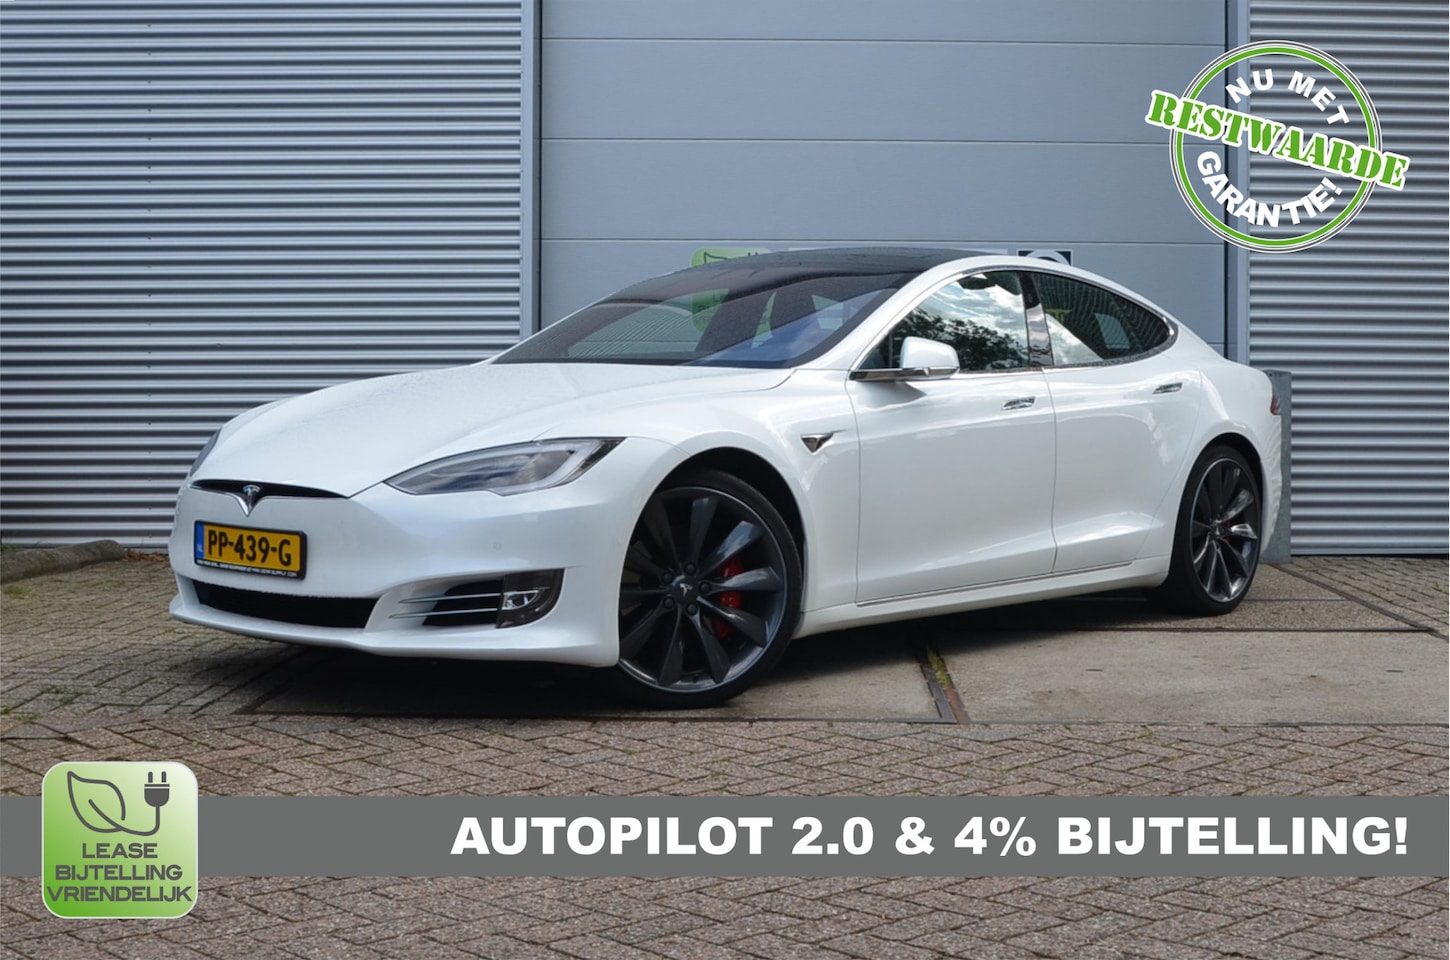 Model S 100D Performance (4x4) ludicrous+, AutoPilot2.0+FSD, 4% Bijtelling, incl. BTW - Occasion te koop op AutoWereld.nl